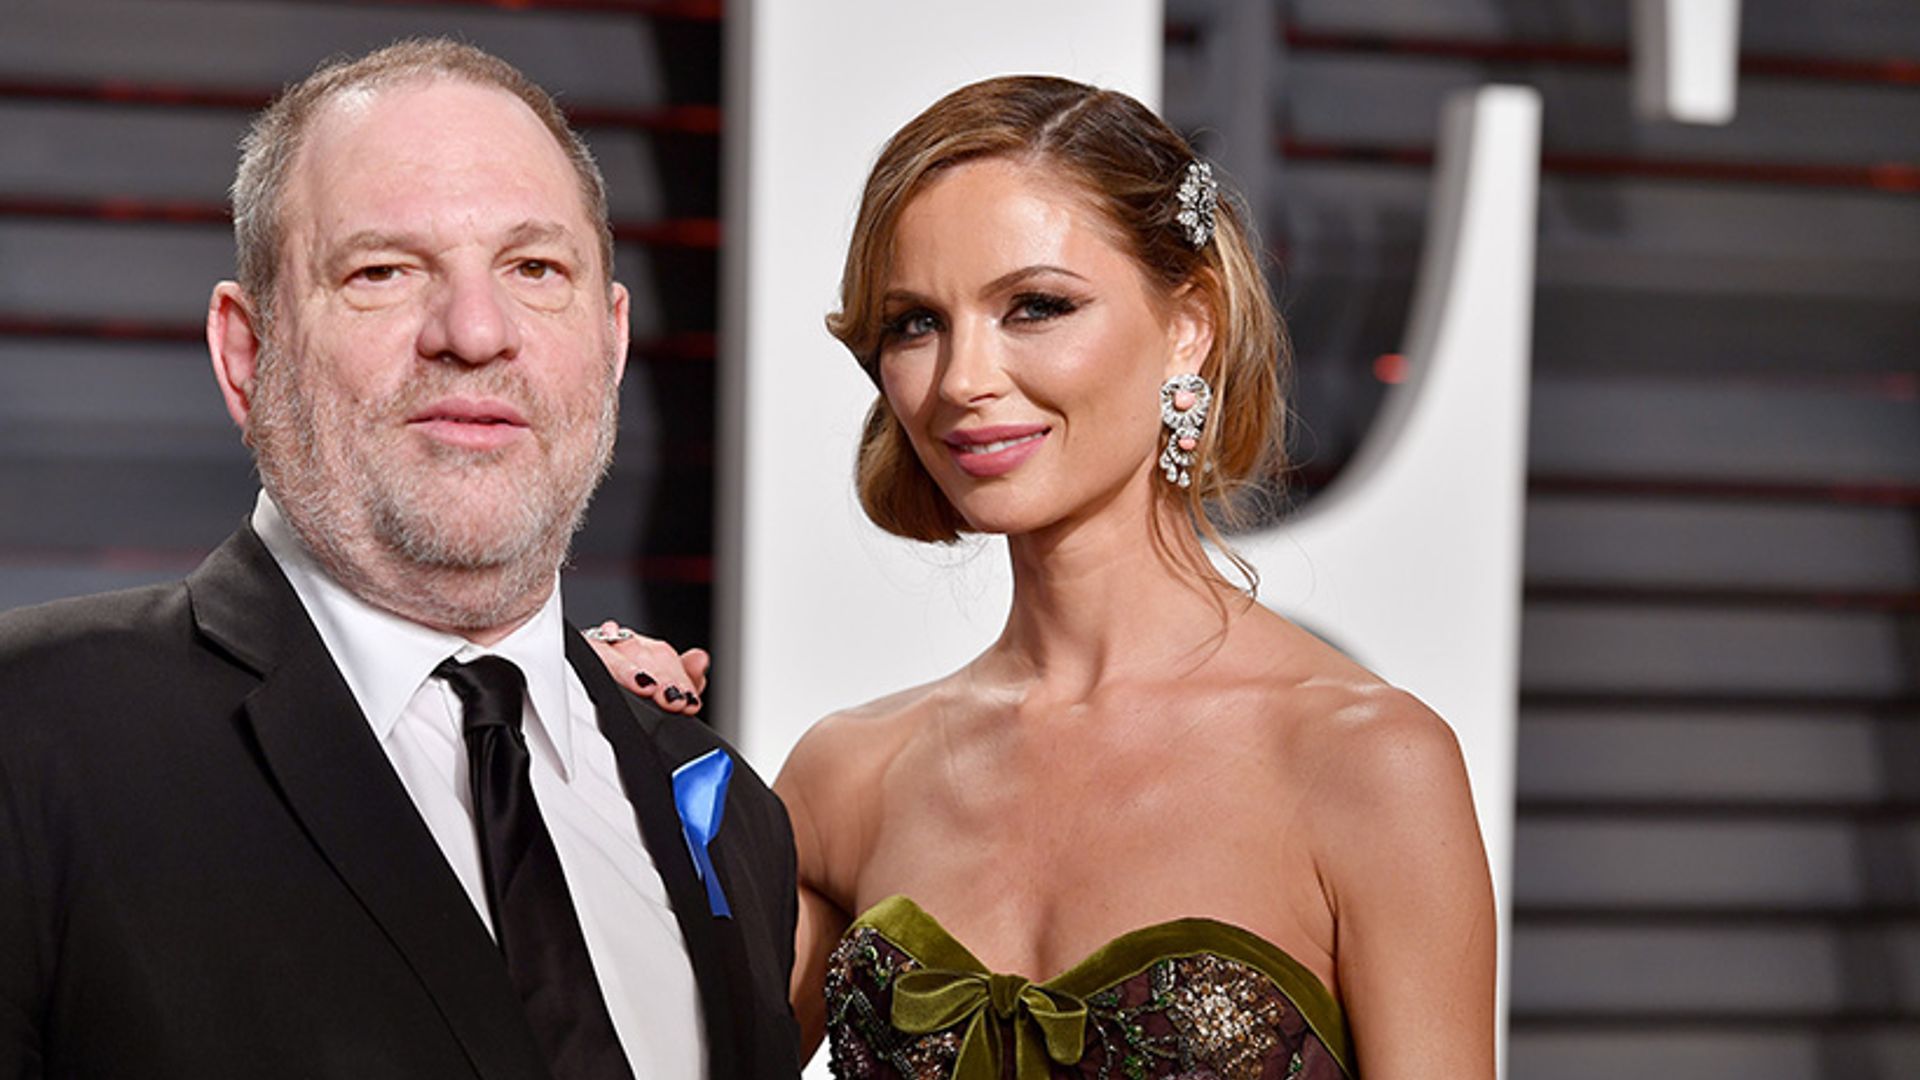 Harvey Weinstein's wife Georgina Chapman announces she is leaving him